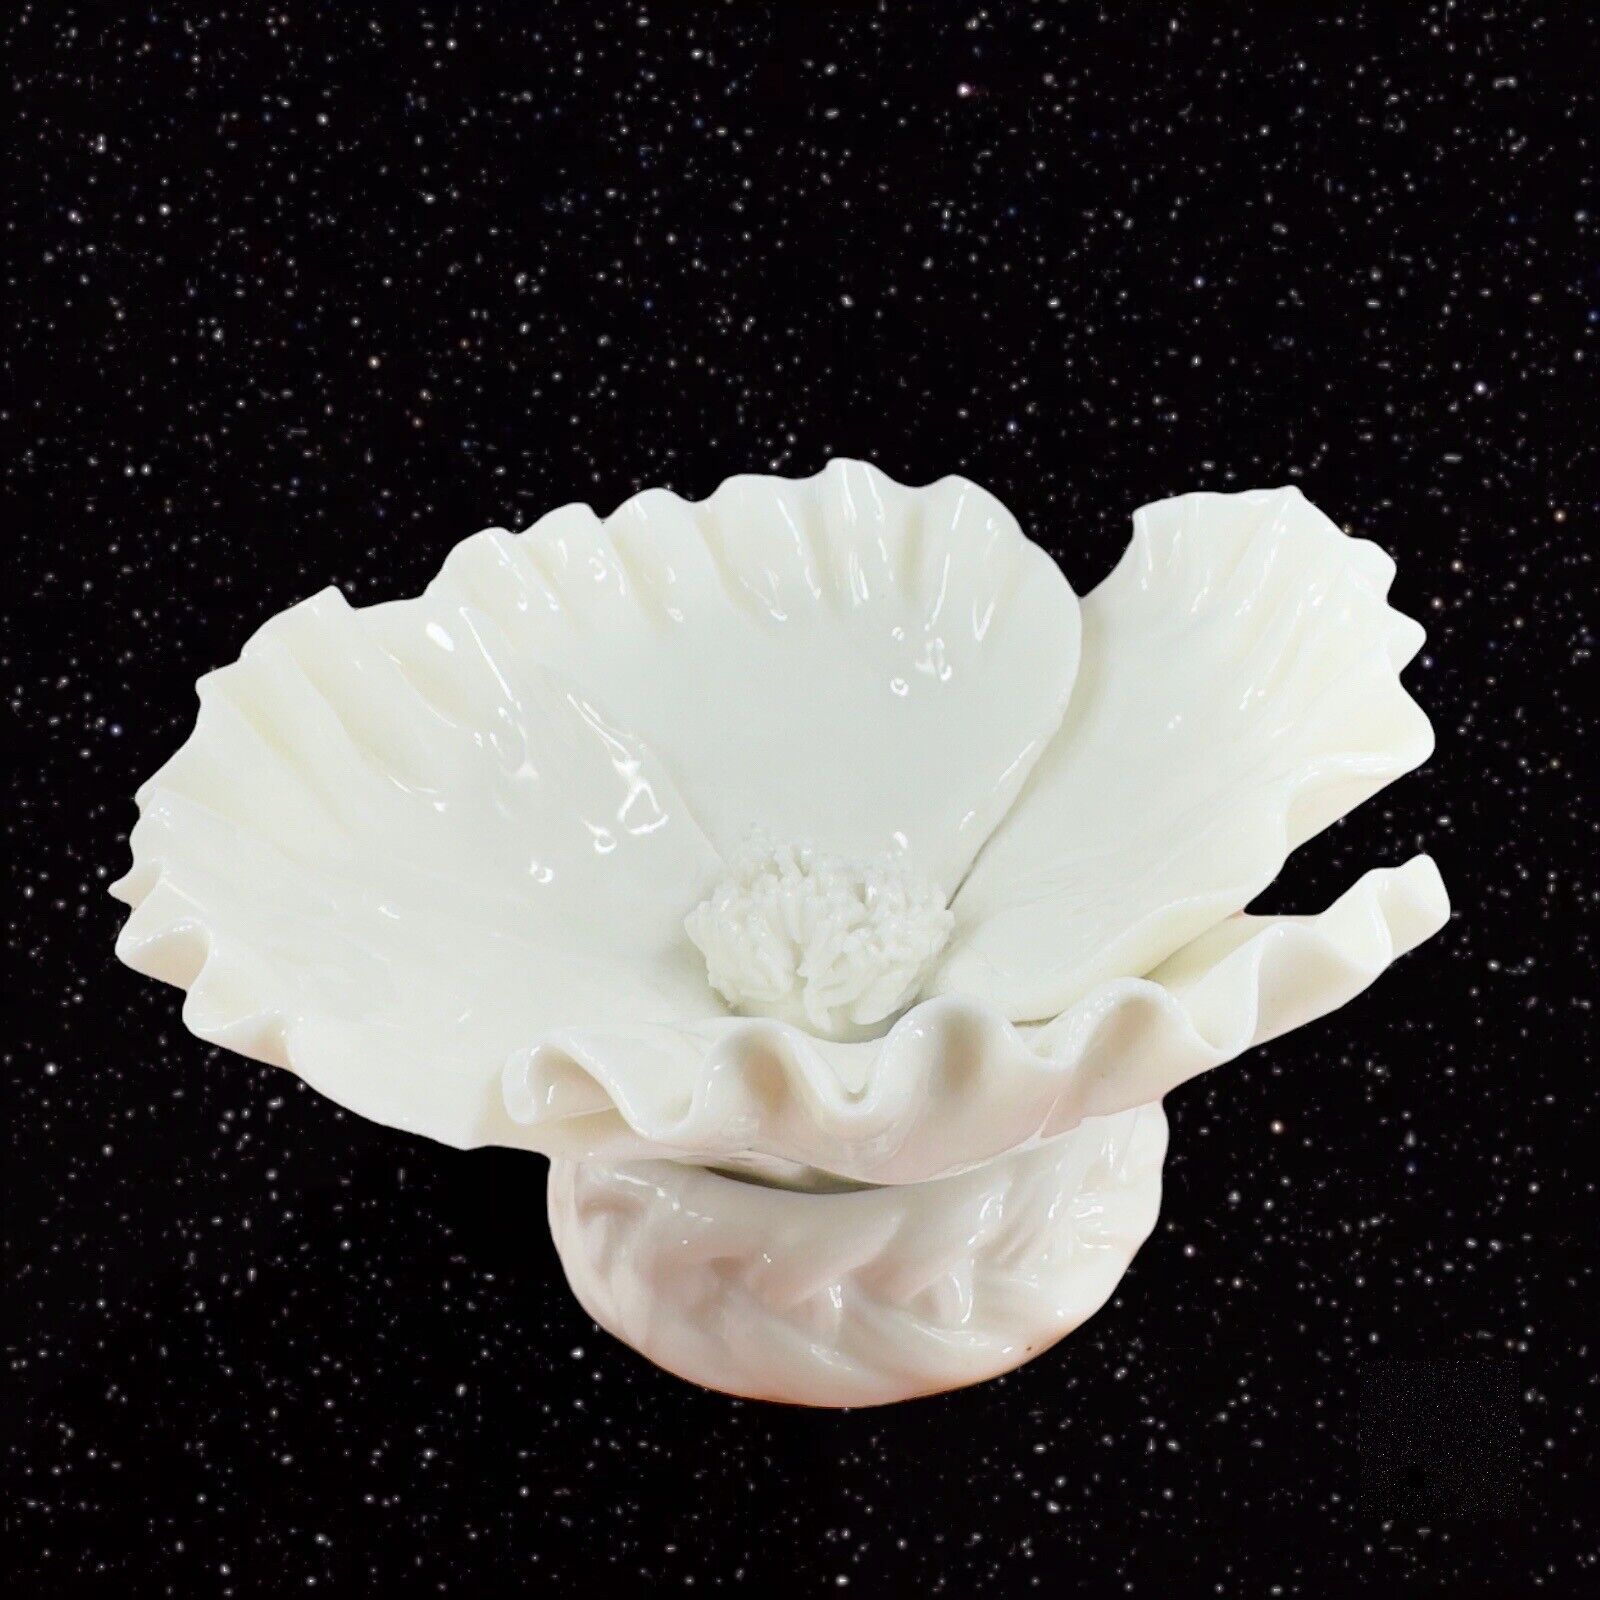 Anthropologie White Porcelain Ceramic Delicate Flower Sculpture Figurine W Label